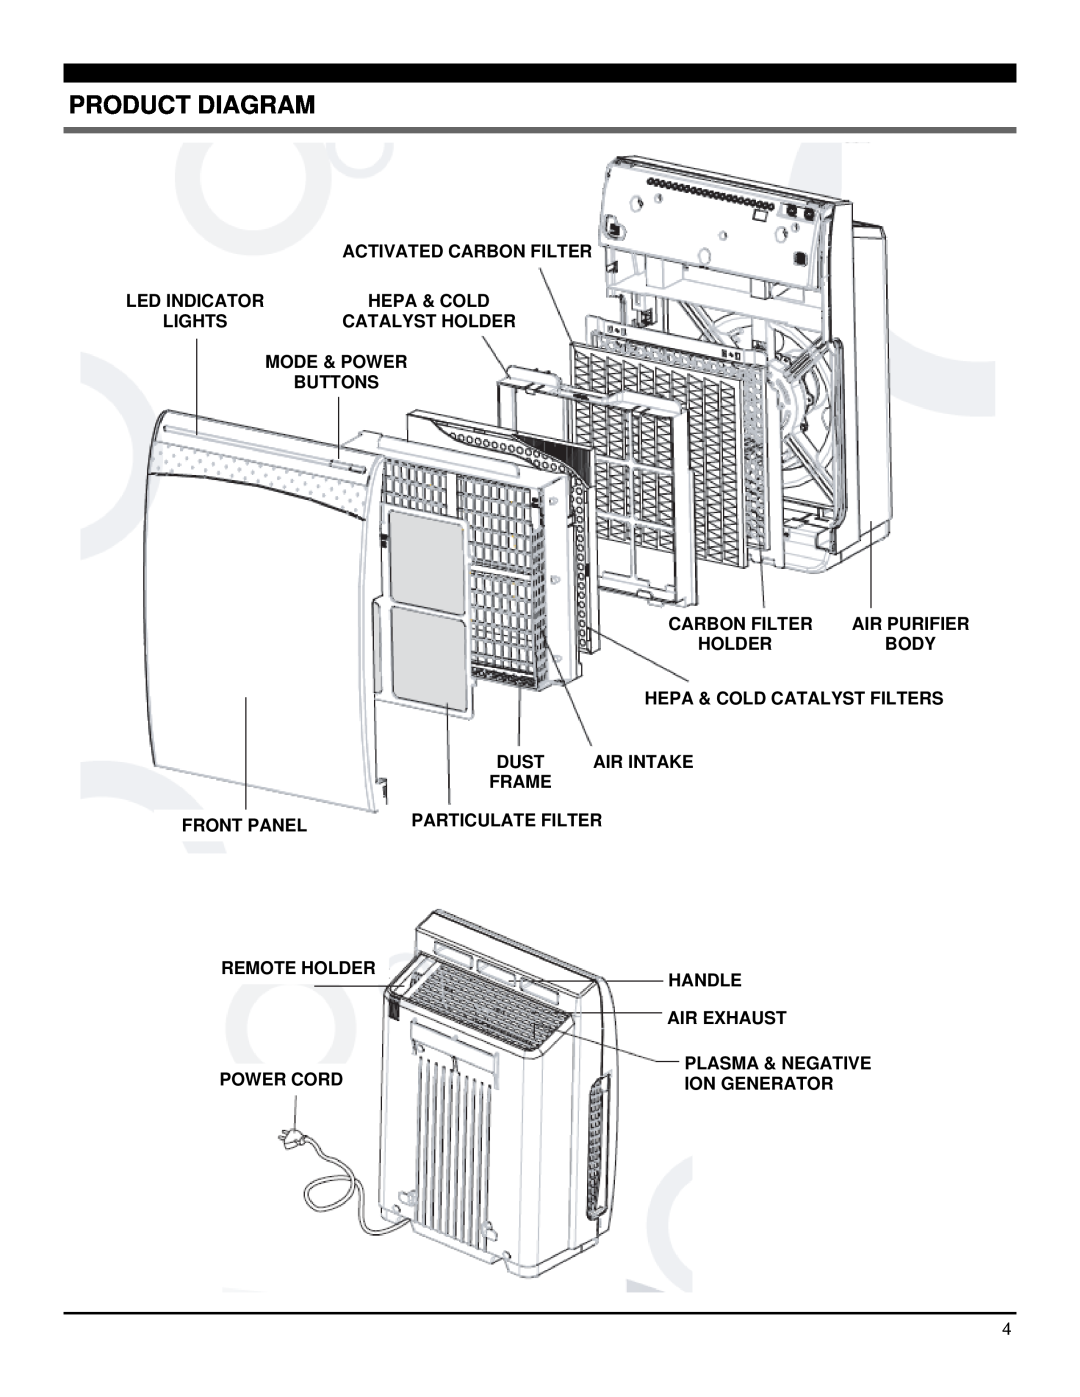 Soleus Air AH1-CC-01 operating instructions Product Diagram 